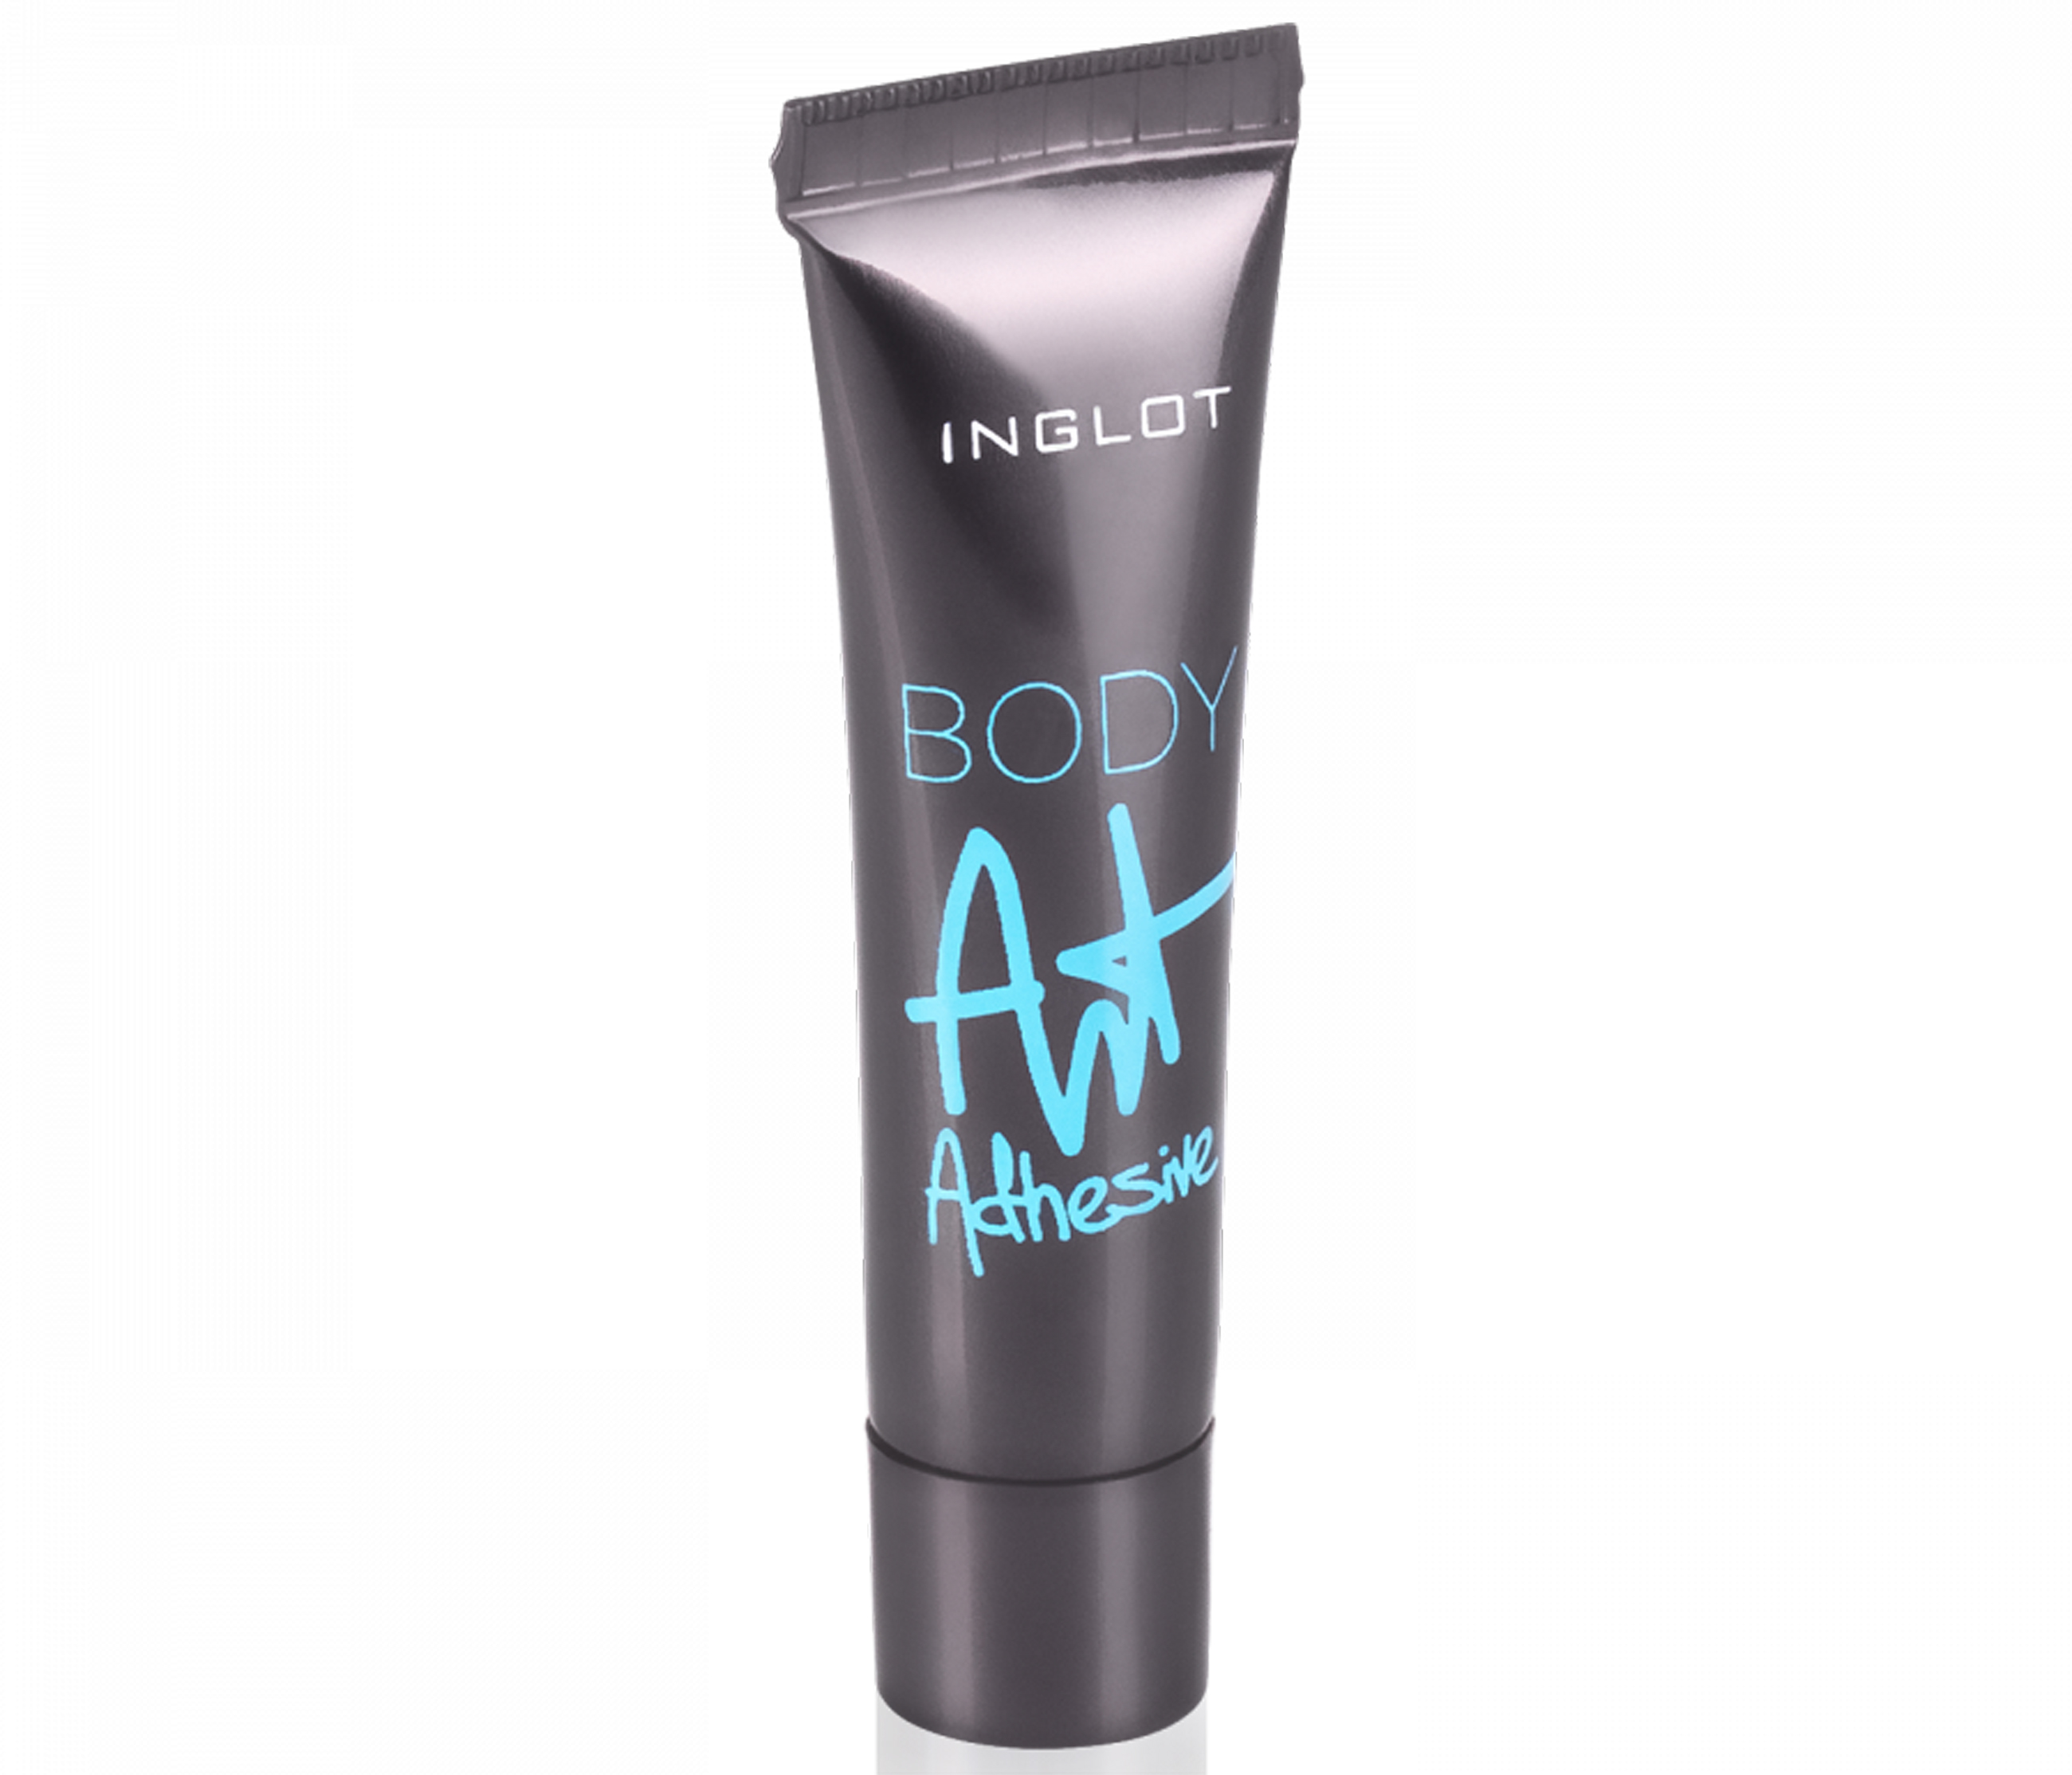 Inglot Body Art Adhesive, £7/AED31.33